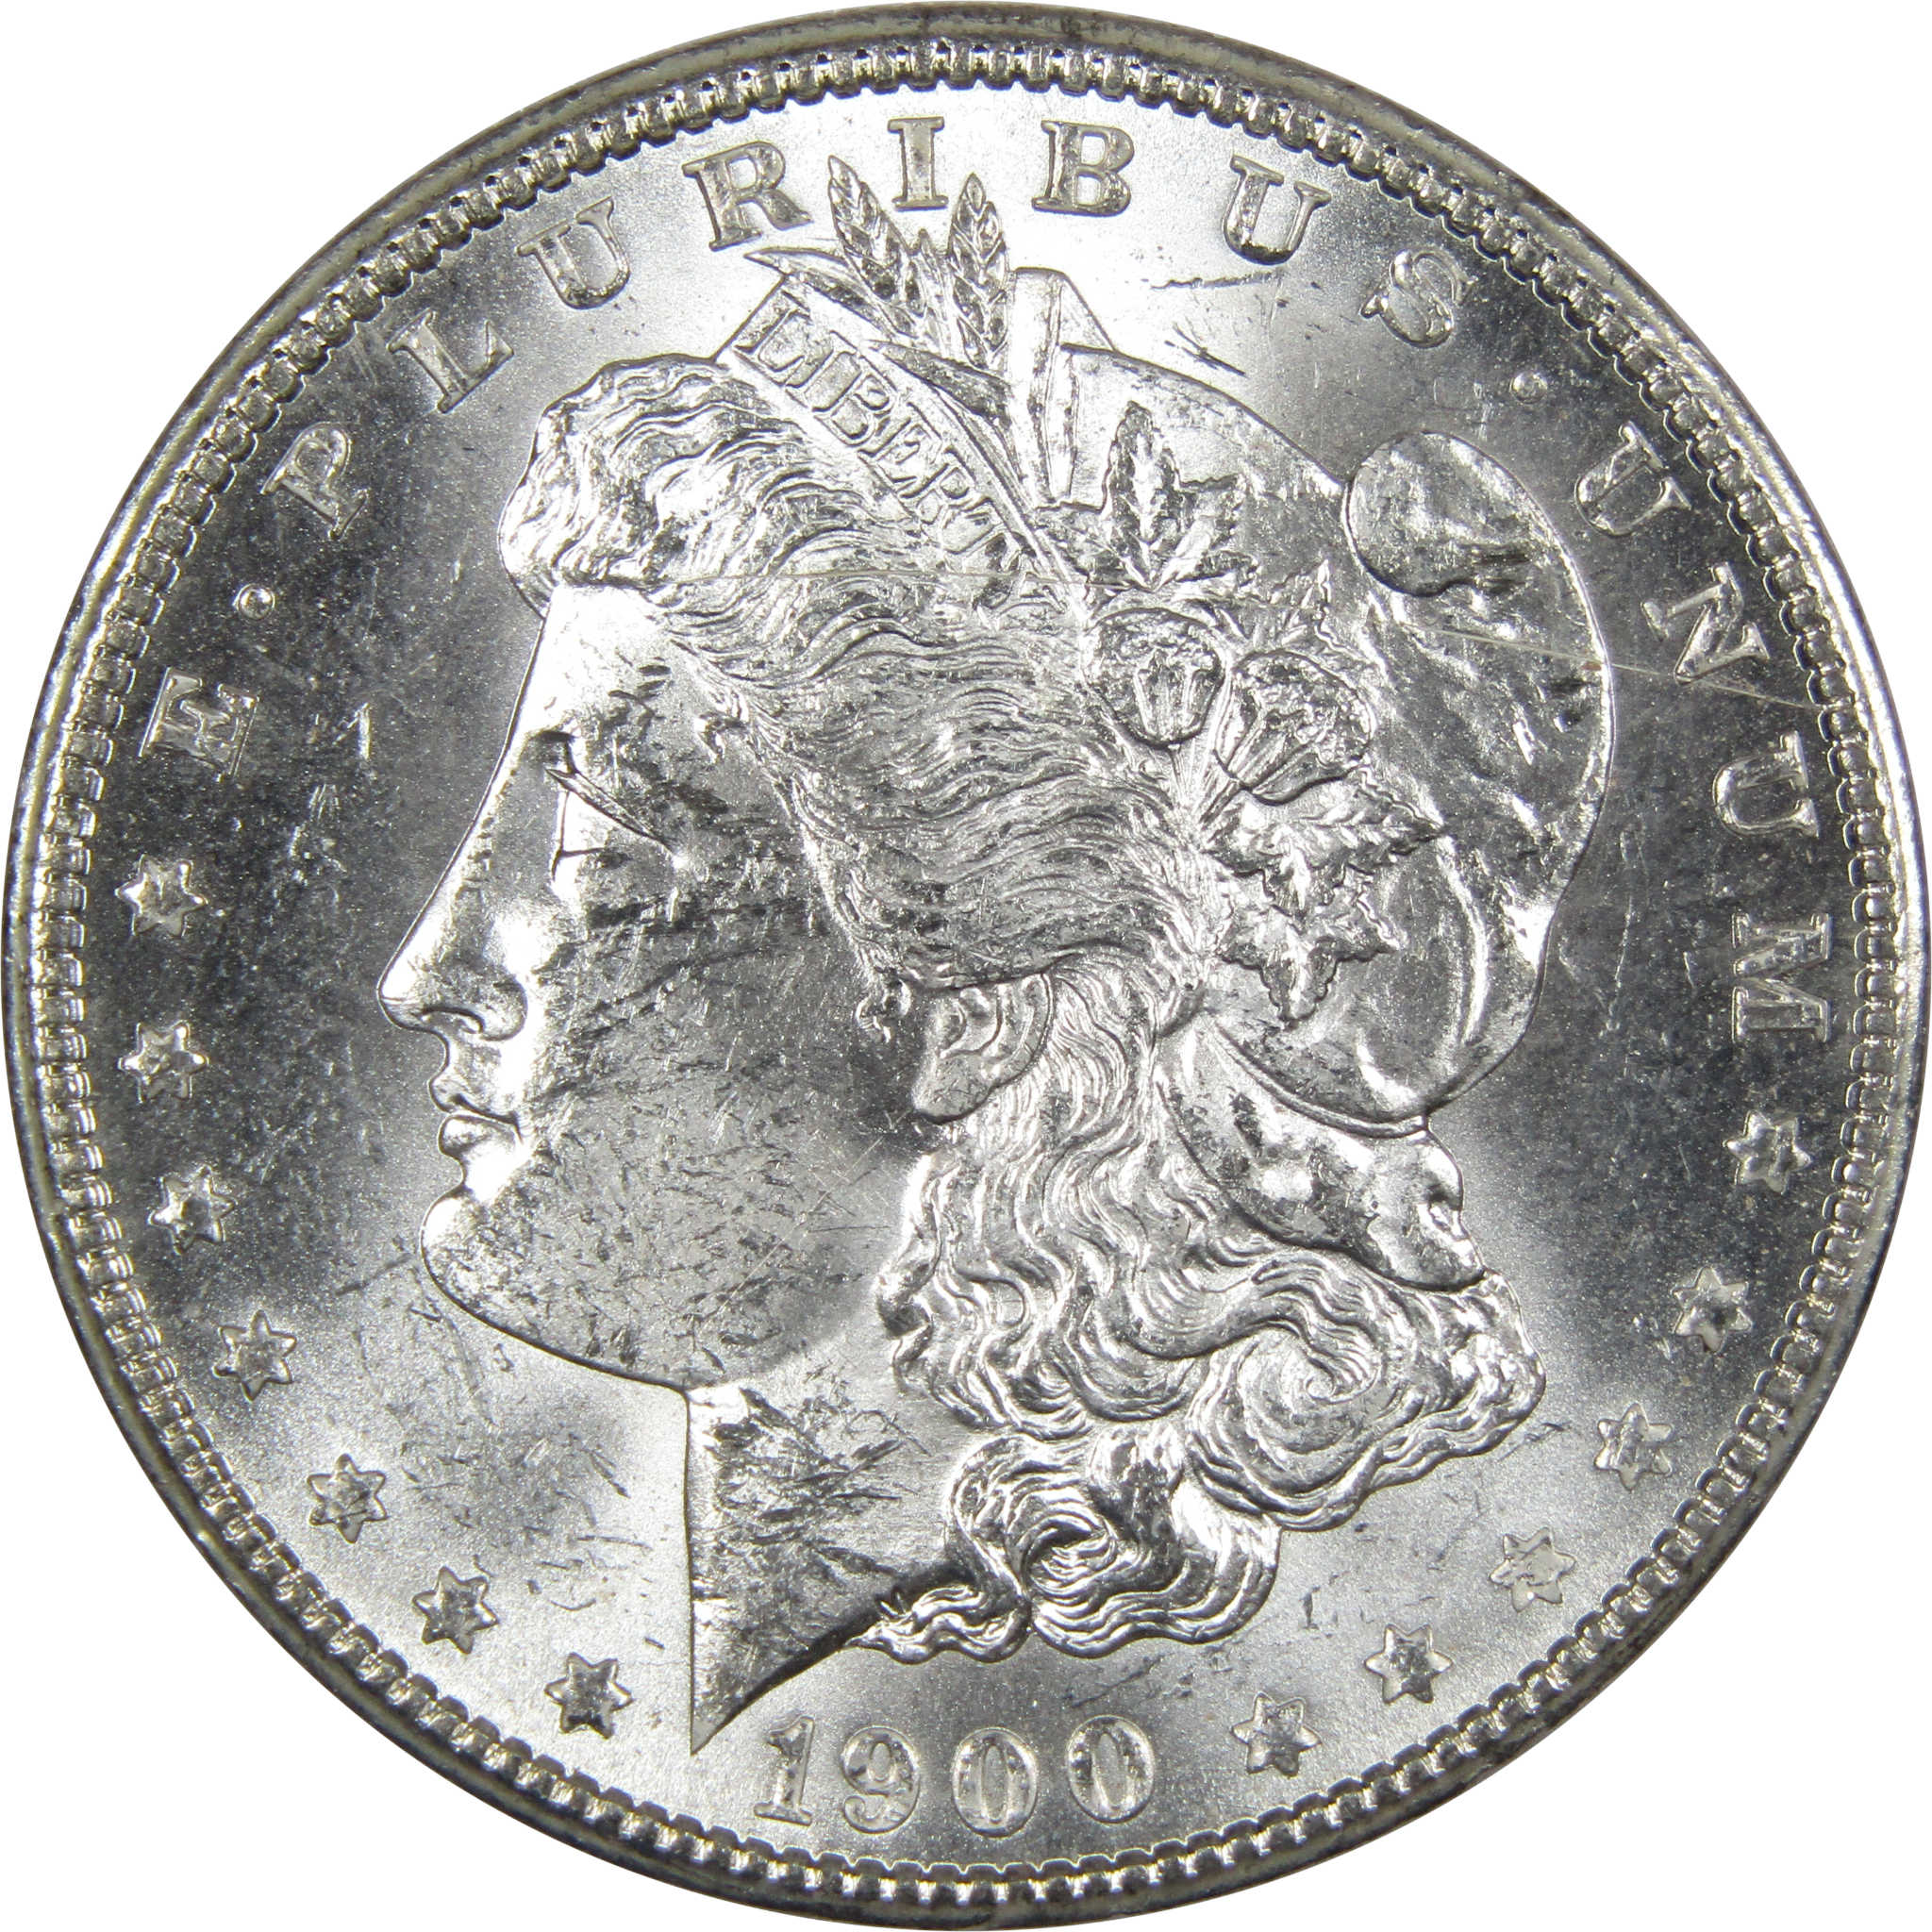 1900 O Morgan Dollar BU Uncirculated Mint State 90% Silver SKU:IPC9774 - Morgan coin - Morgan silver dollar - Morgan silver dollar for sale - Profile Coins &amp; Collectibles